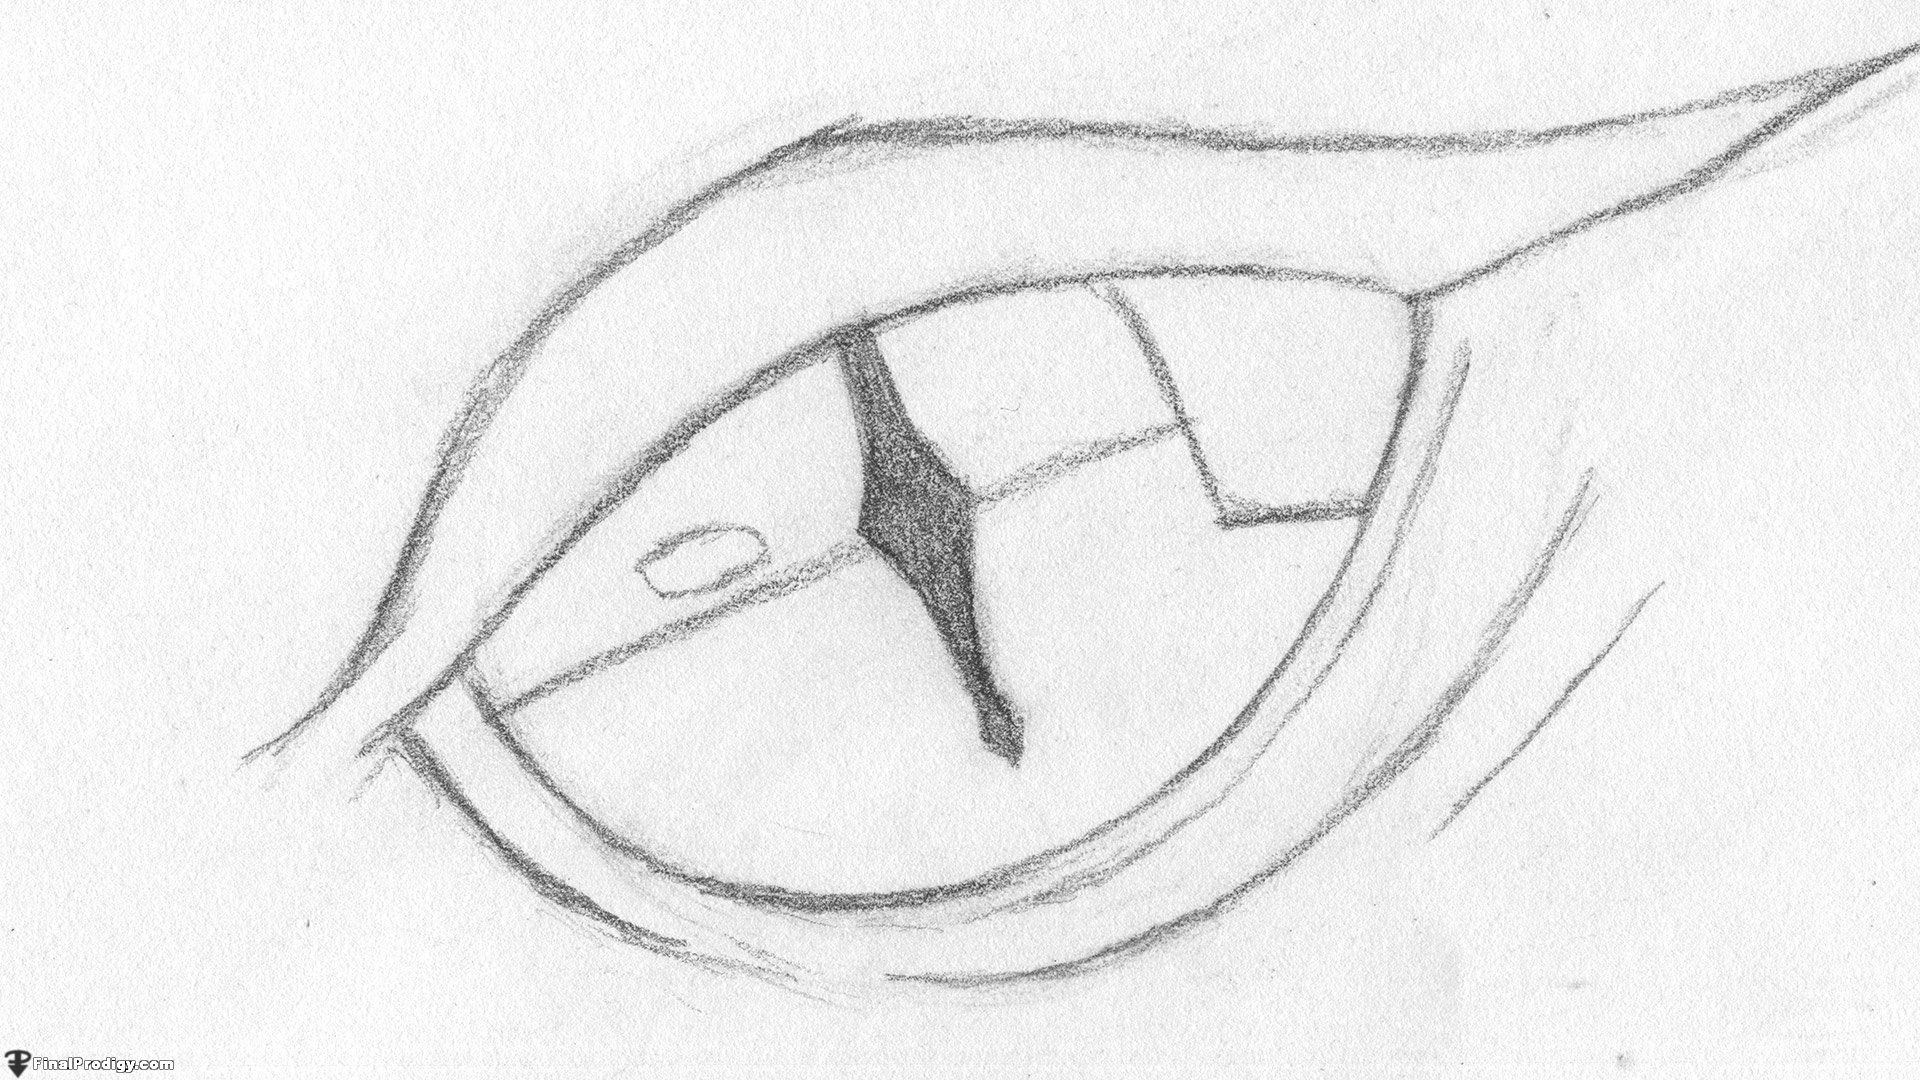 Drawings Of Dragons Eyes How to Draw A Dragon Eye Smaug S Eye Finalprodigy Com Things I